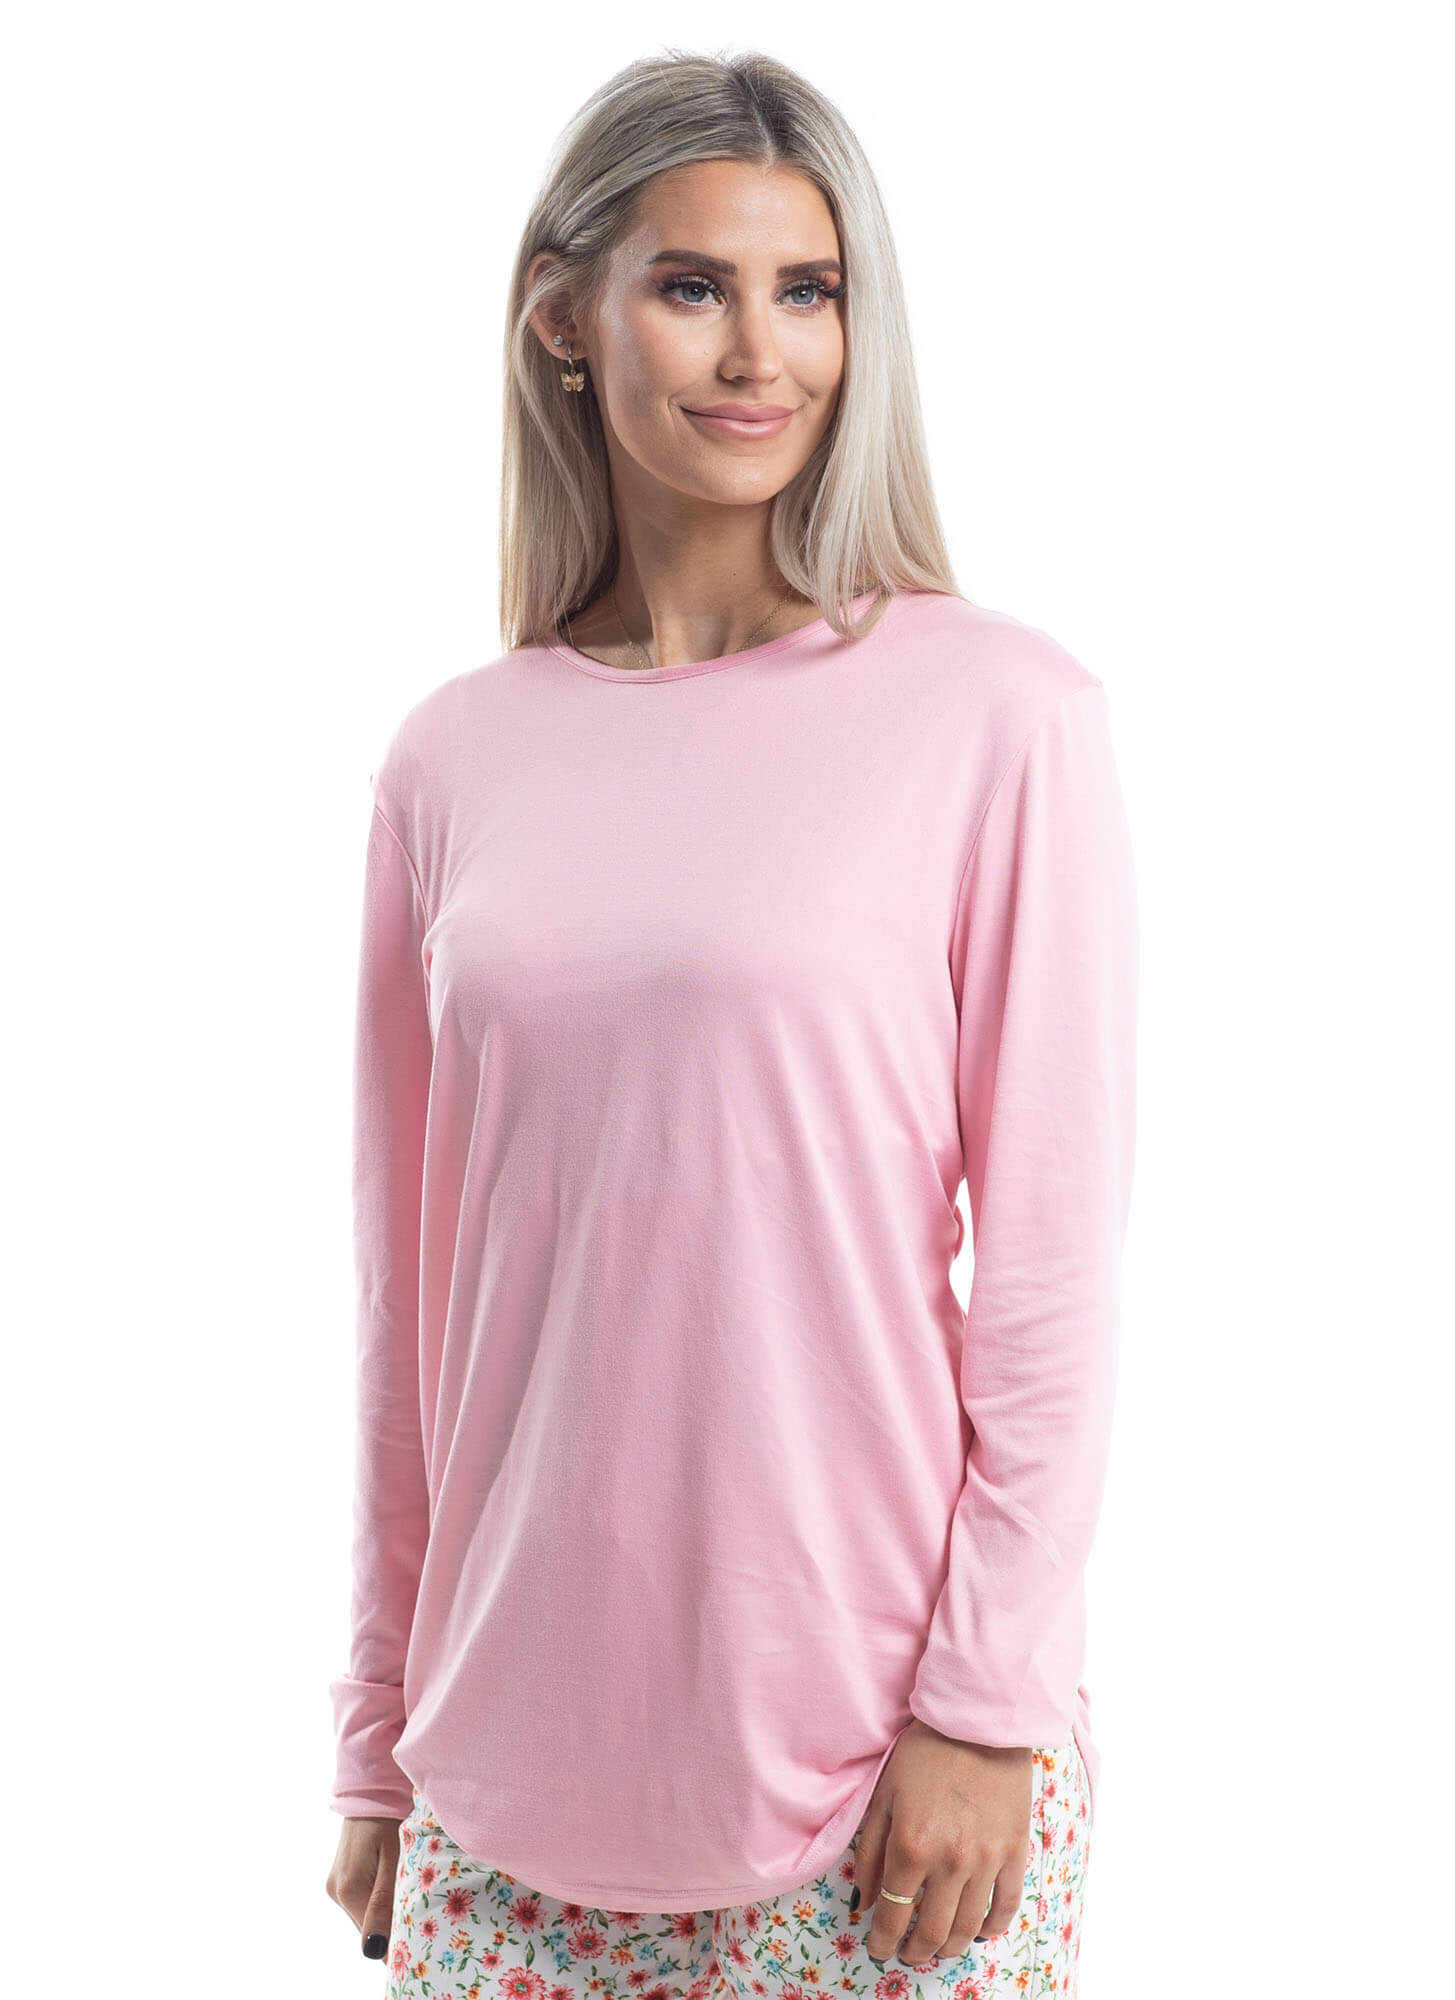 AherBiu Womens Tops Built in Bra Long Sleeve Crew Neck Comfy Pajama Tees  Solid Color Sleepwear Soft Tshirts 